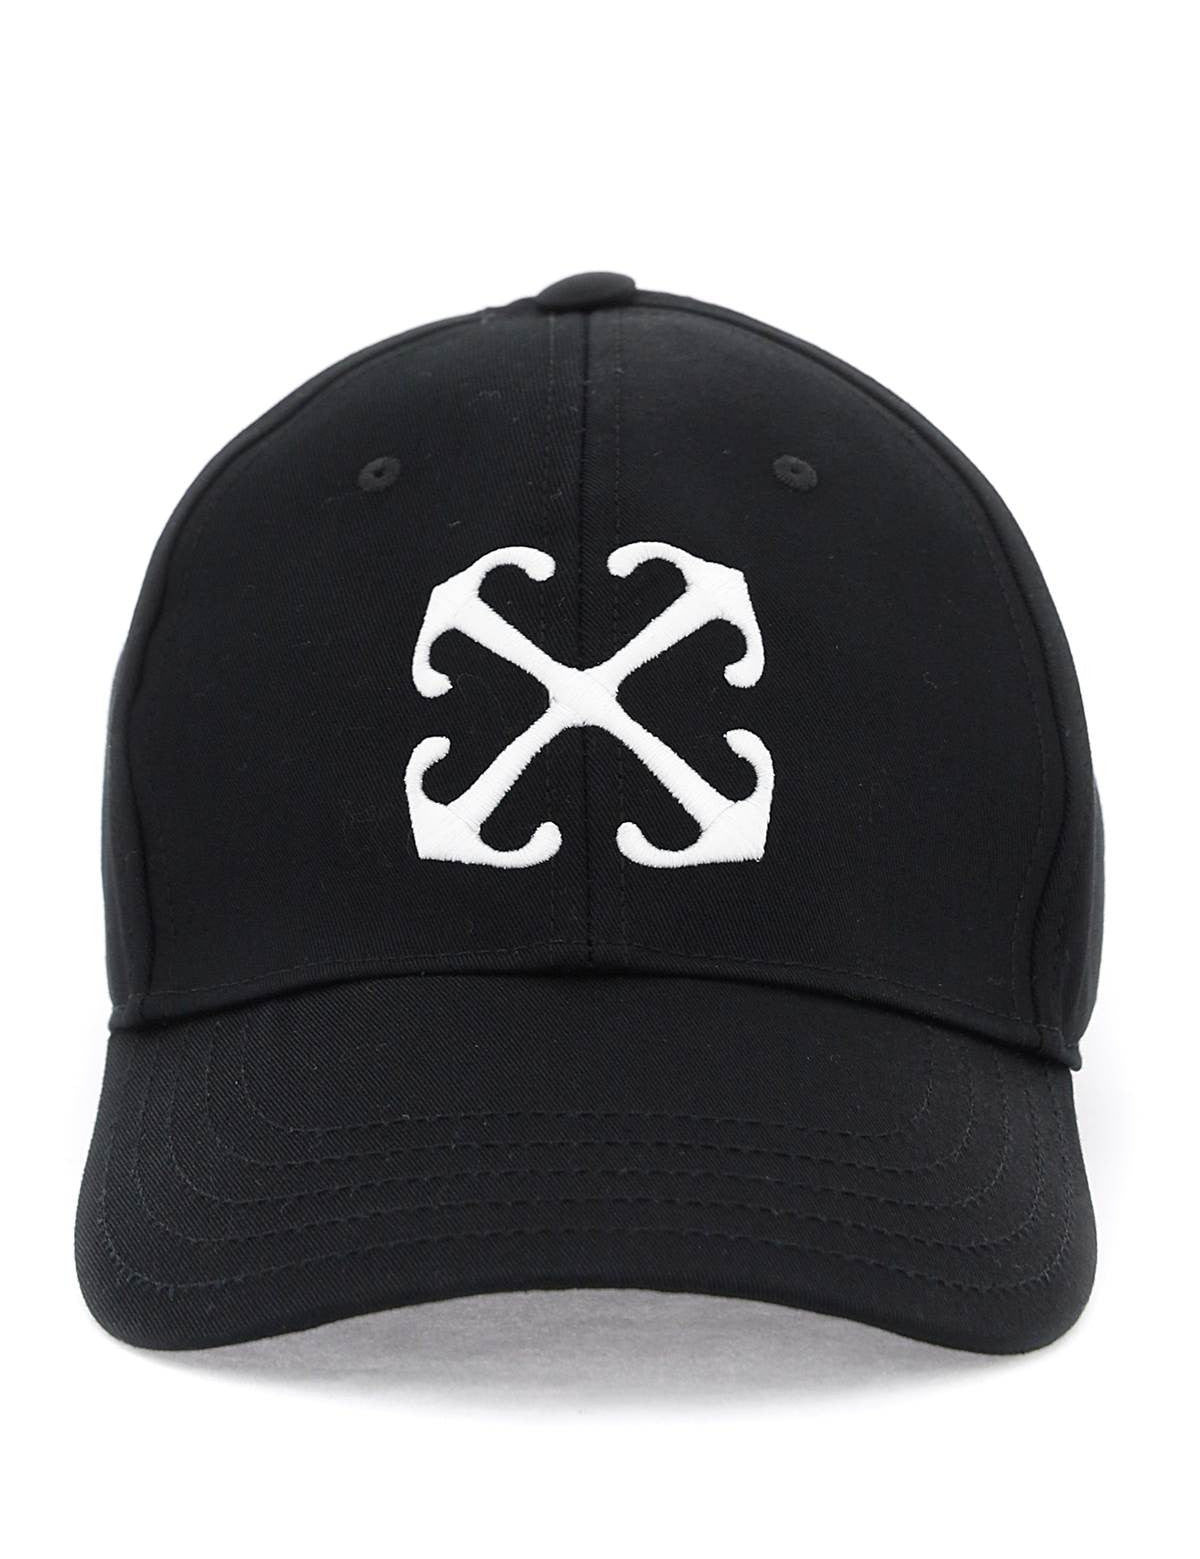 off-white-arrow-logo-baseball-cap-with-adjustable.jpg